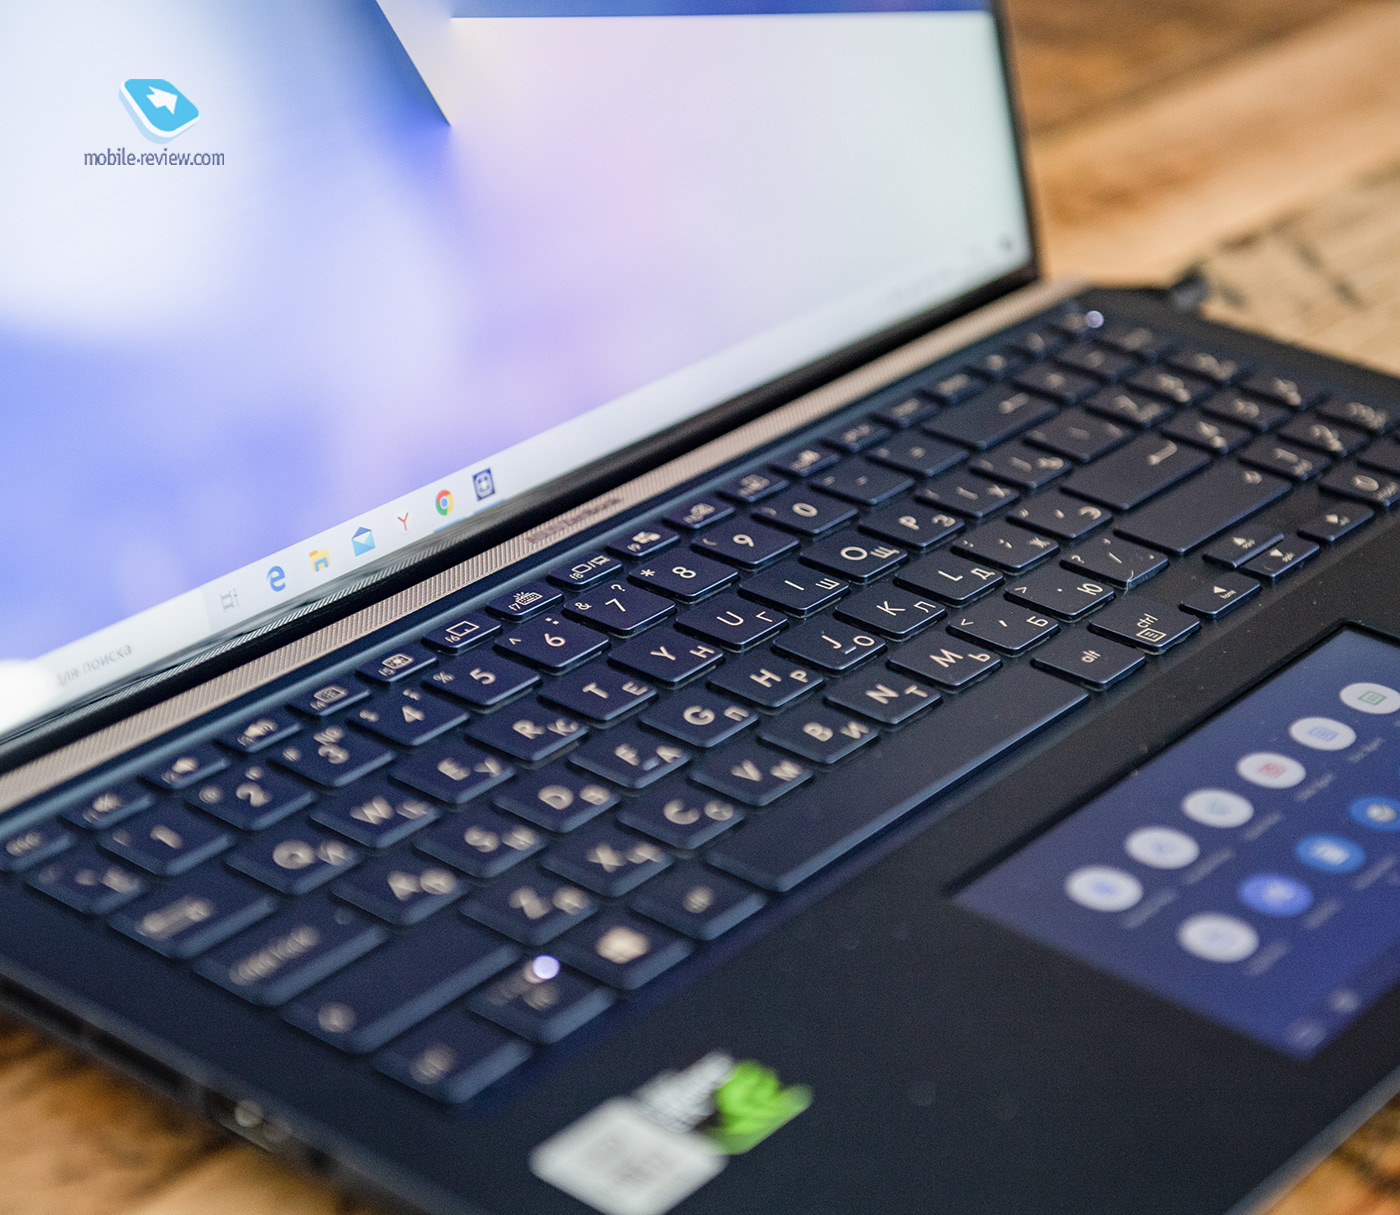 Review ASUS ZenBook 15 (UX534) notebook